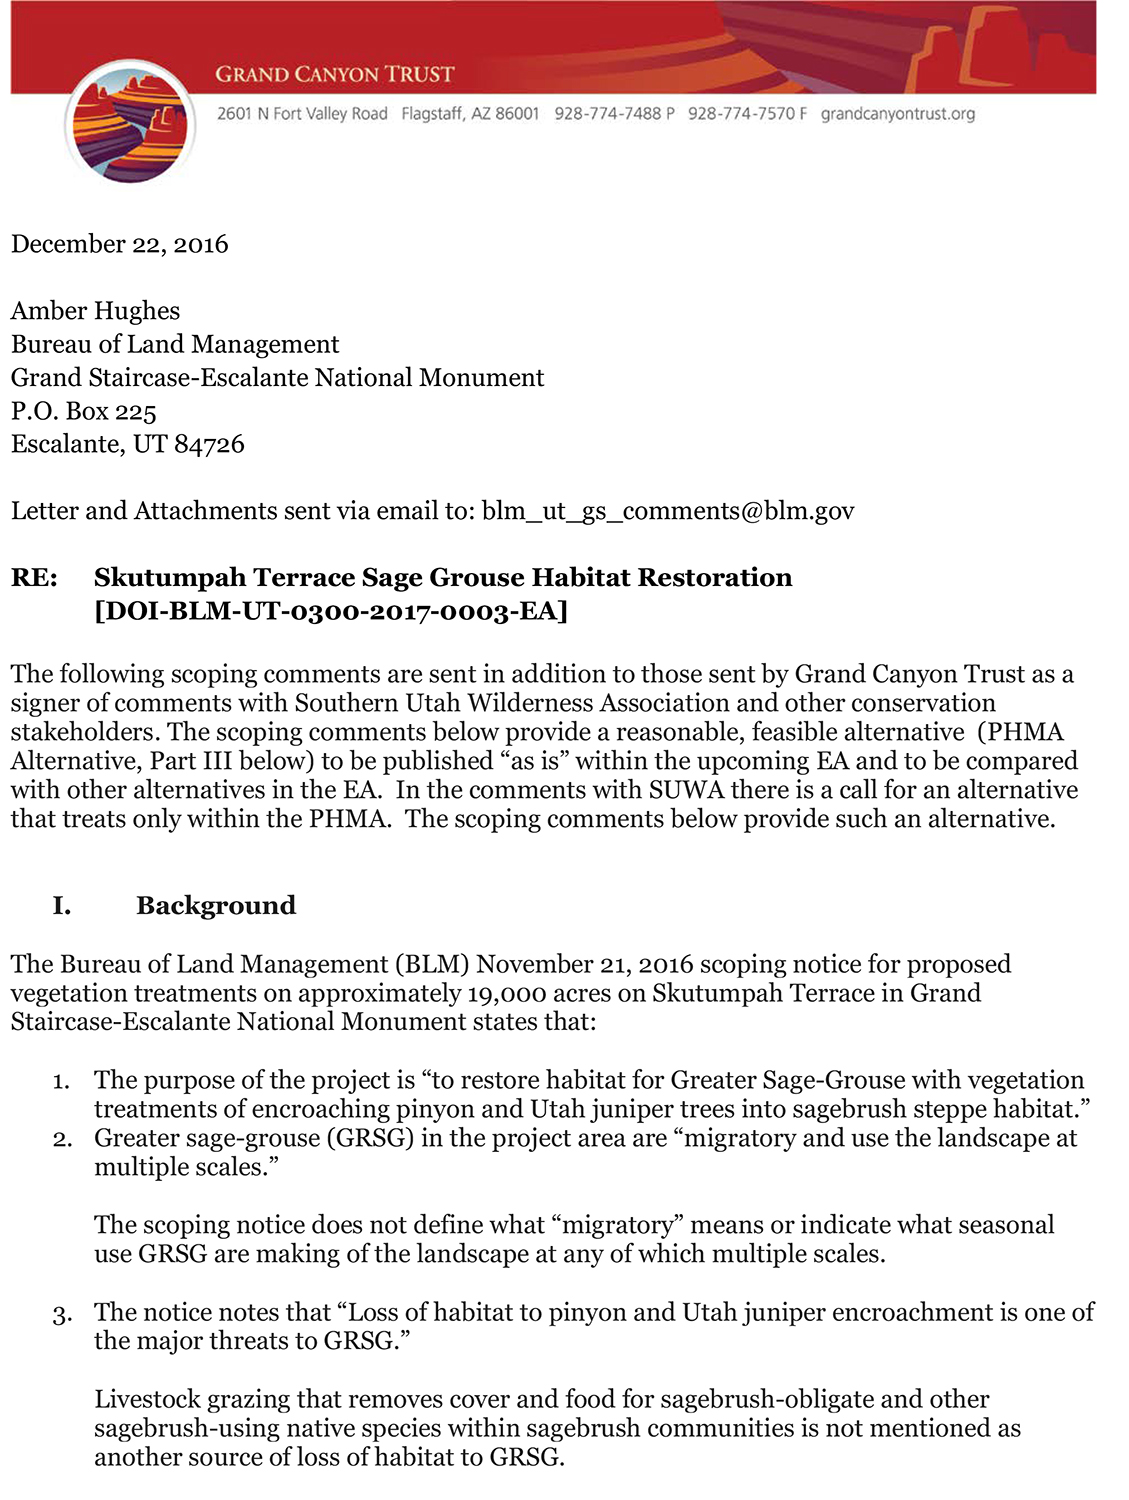 Letter regarding Skutumpah terrace sage grouse habitat restoration